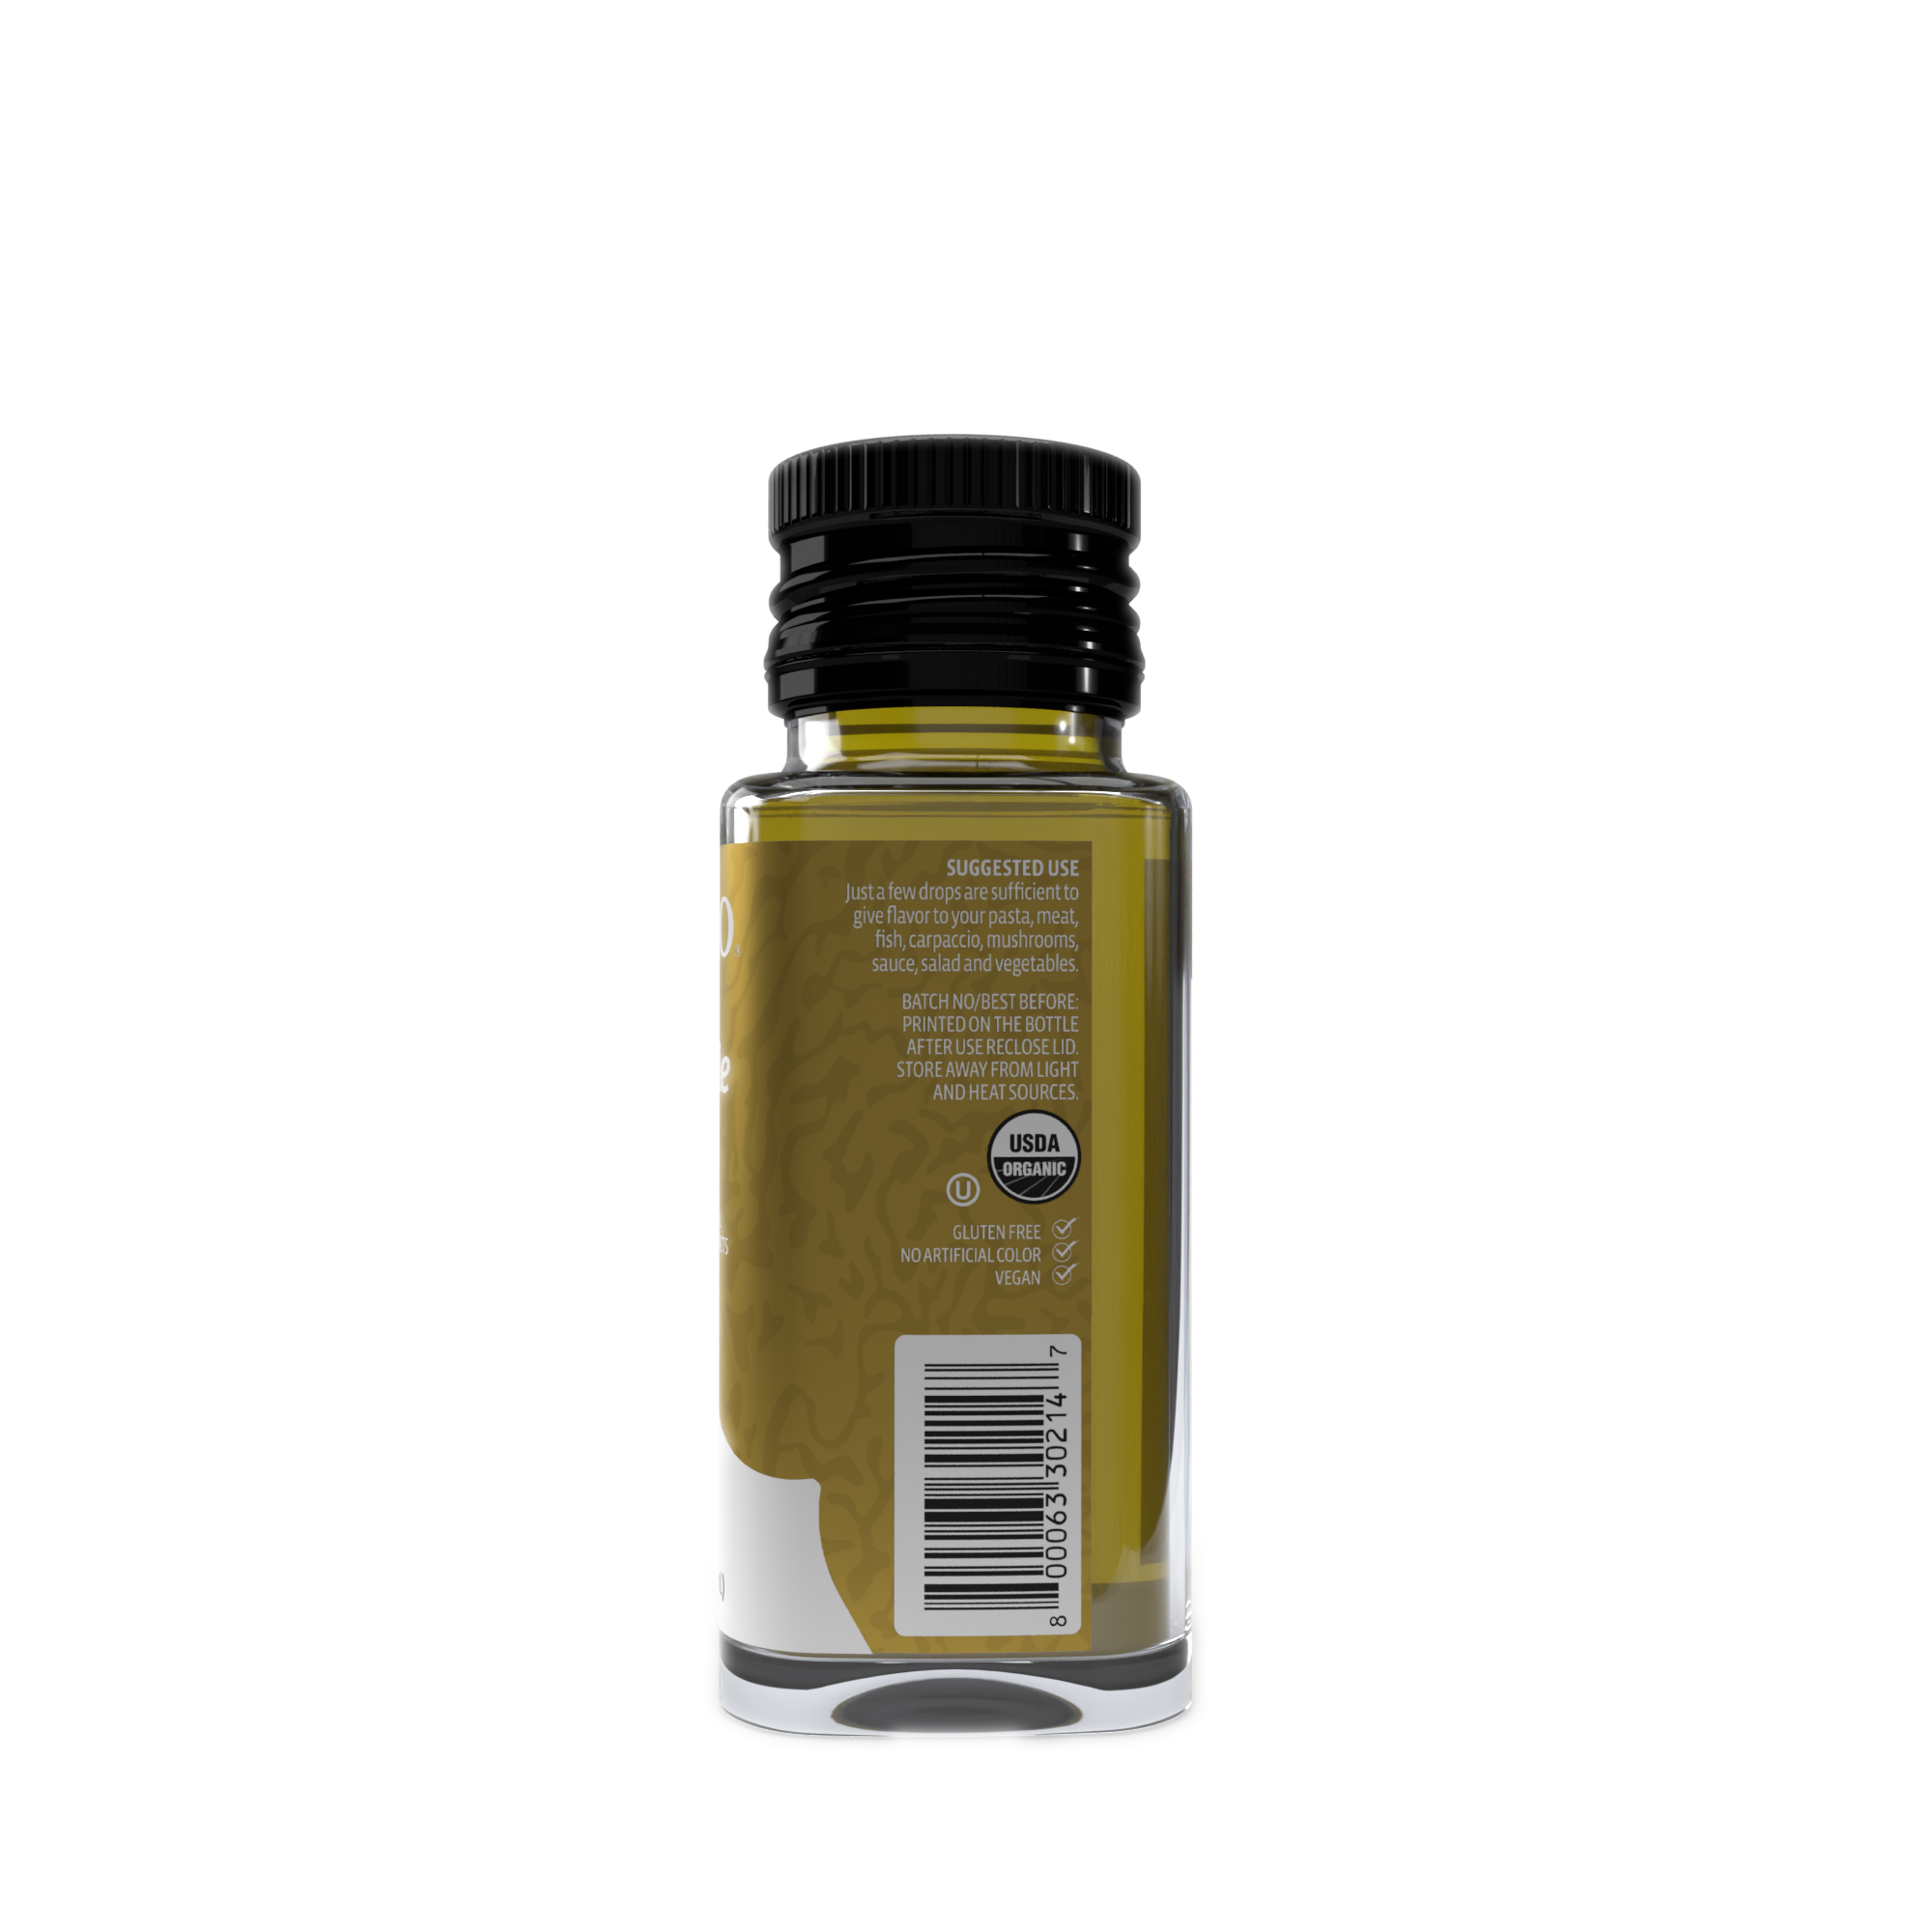 USDA Organic White Truffle Oil - 3.4 fl oz side image 2